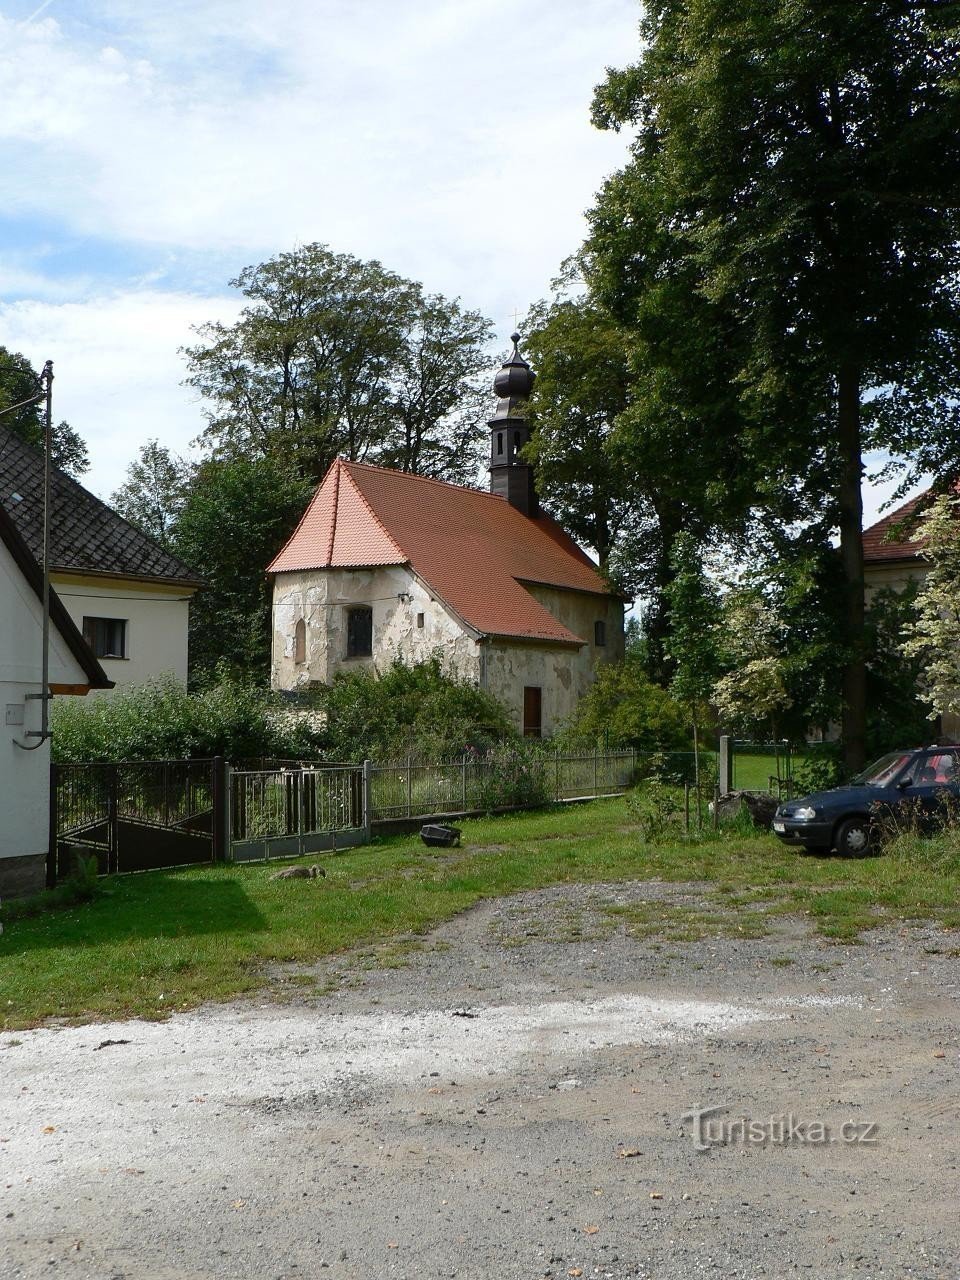 Mlázovy, εκκλησία του Αγίου Ιωάννη του Βαπτιστή